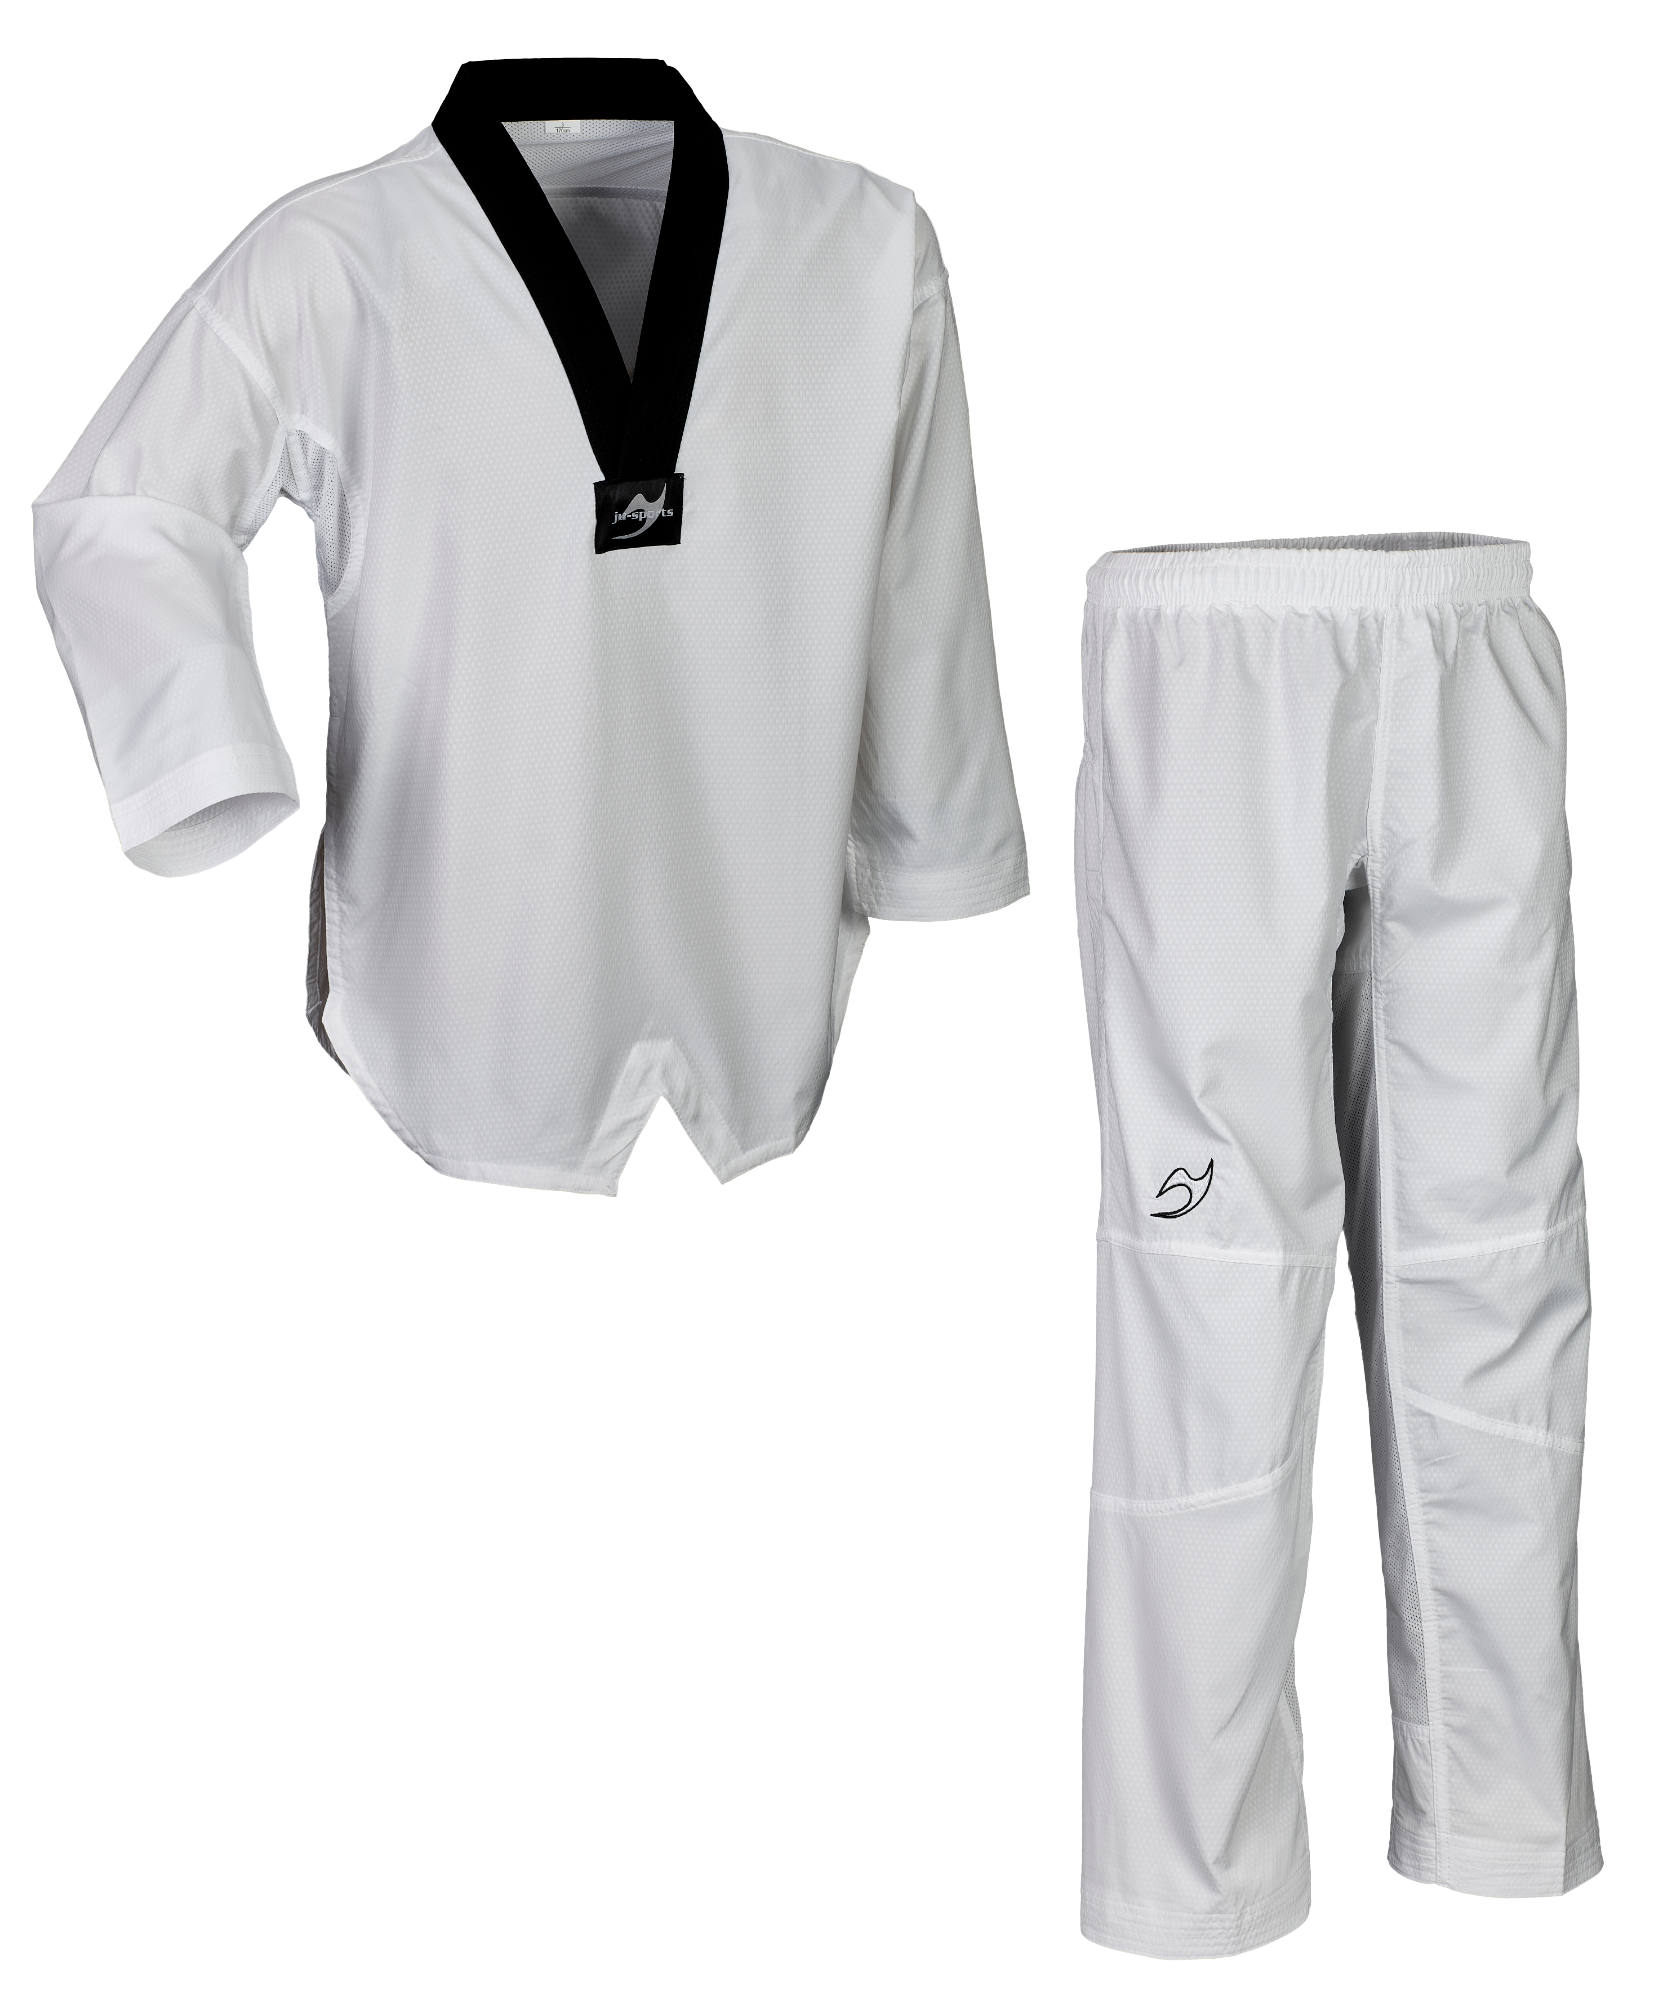 Taekwondo-Anzug Performance pro schwarzes Revers